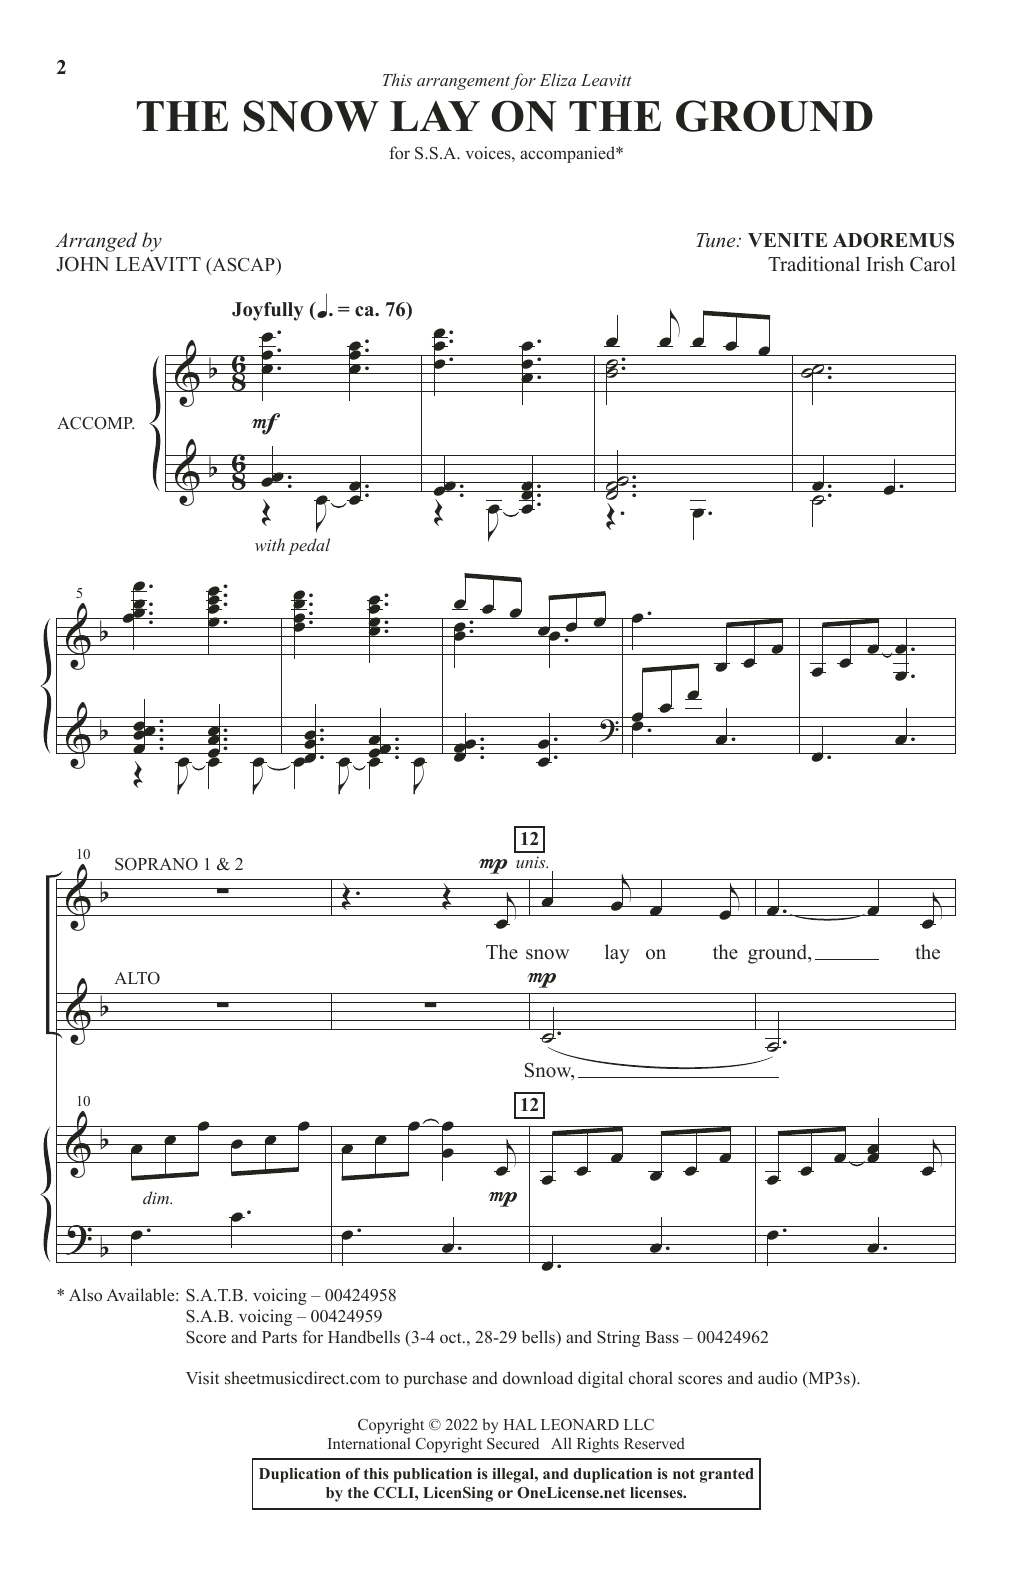 Traditional Irish Carol The Snow Lay On The Ground (arr. John Leavitt) sheet music notes and chords arranged for SATB Choir